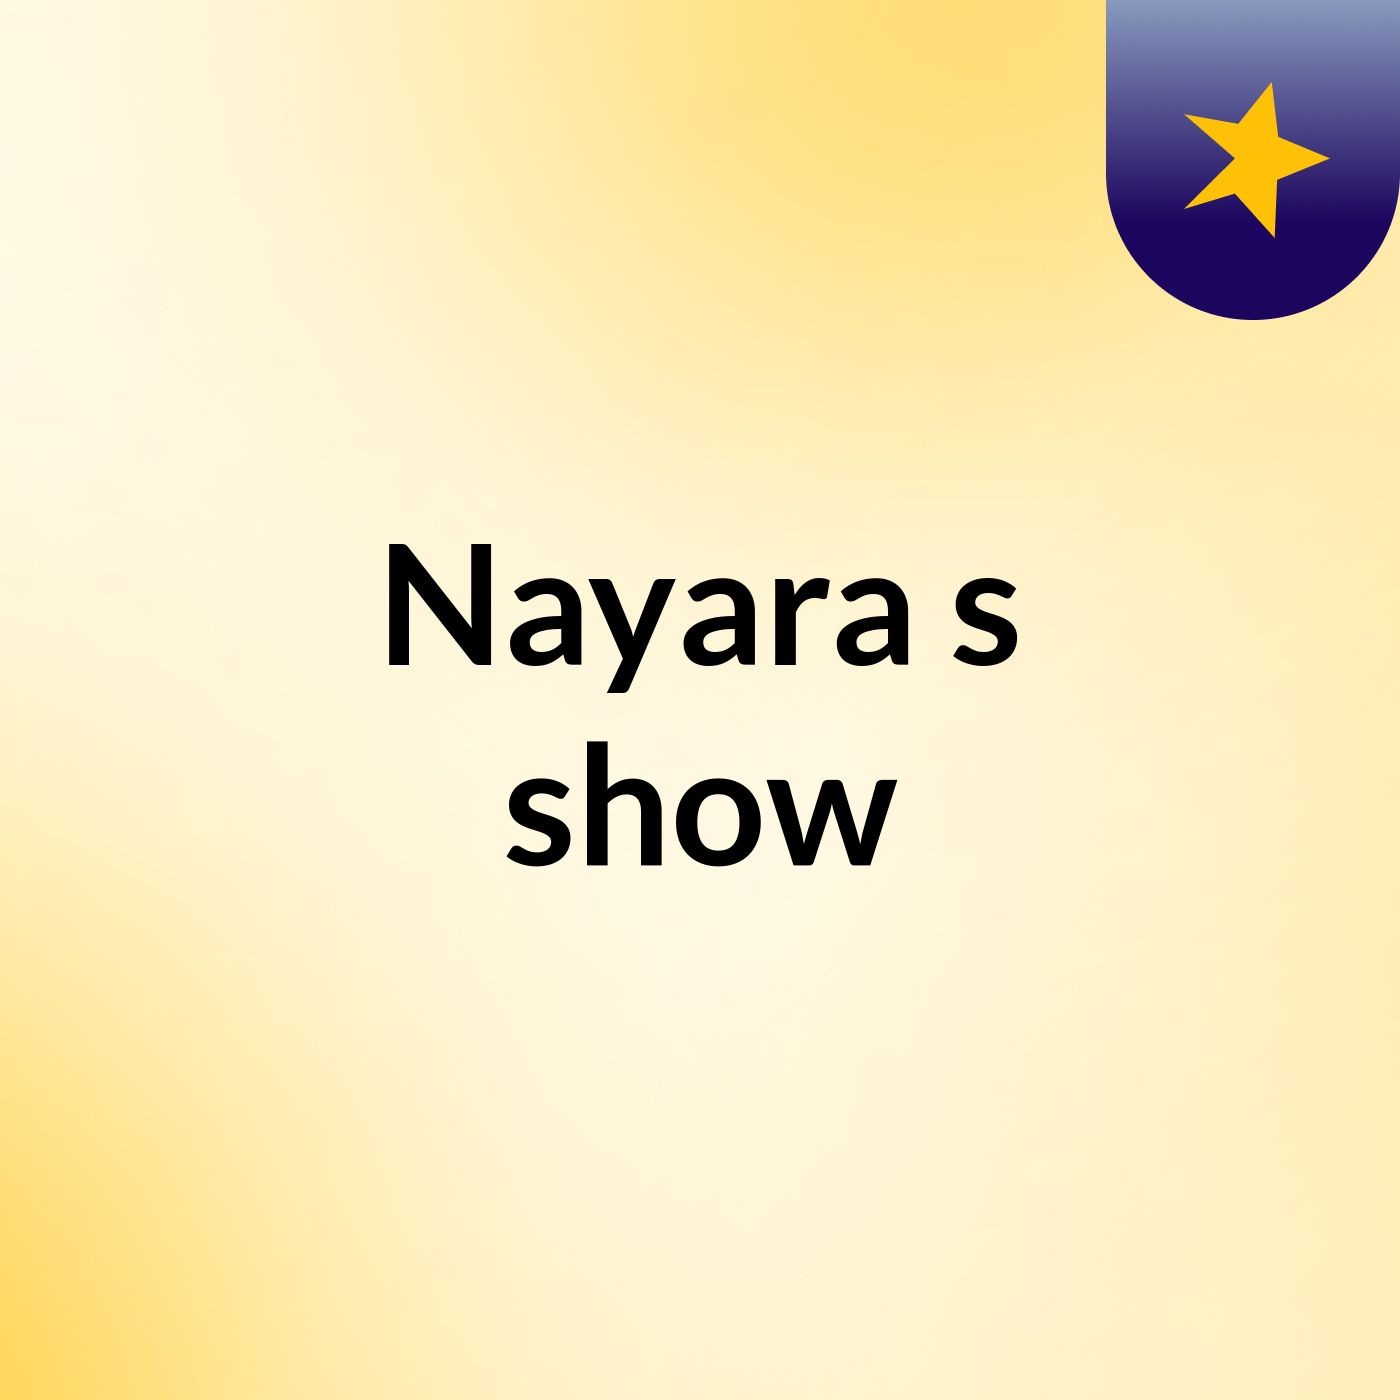 Nayara's show